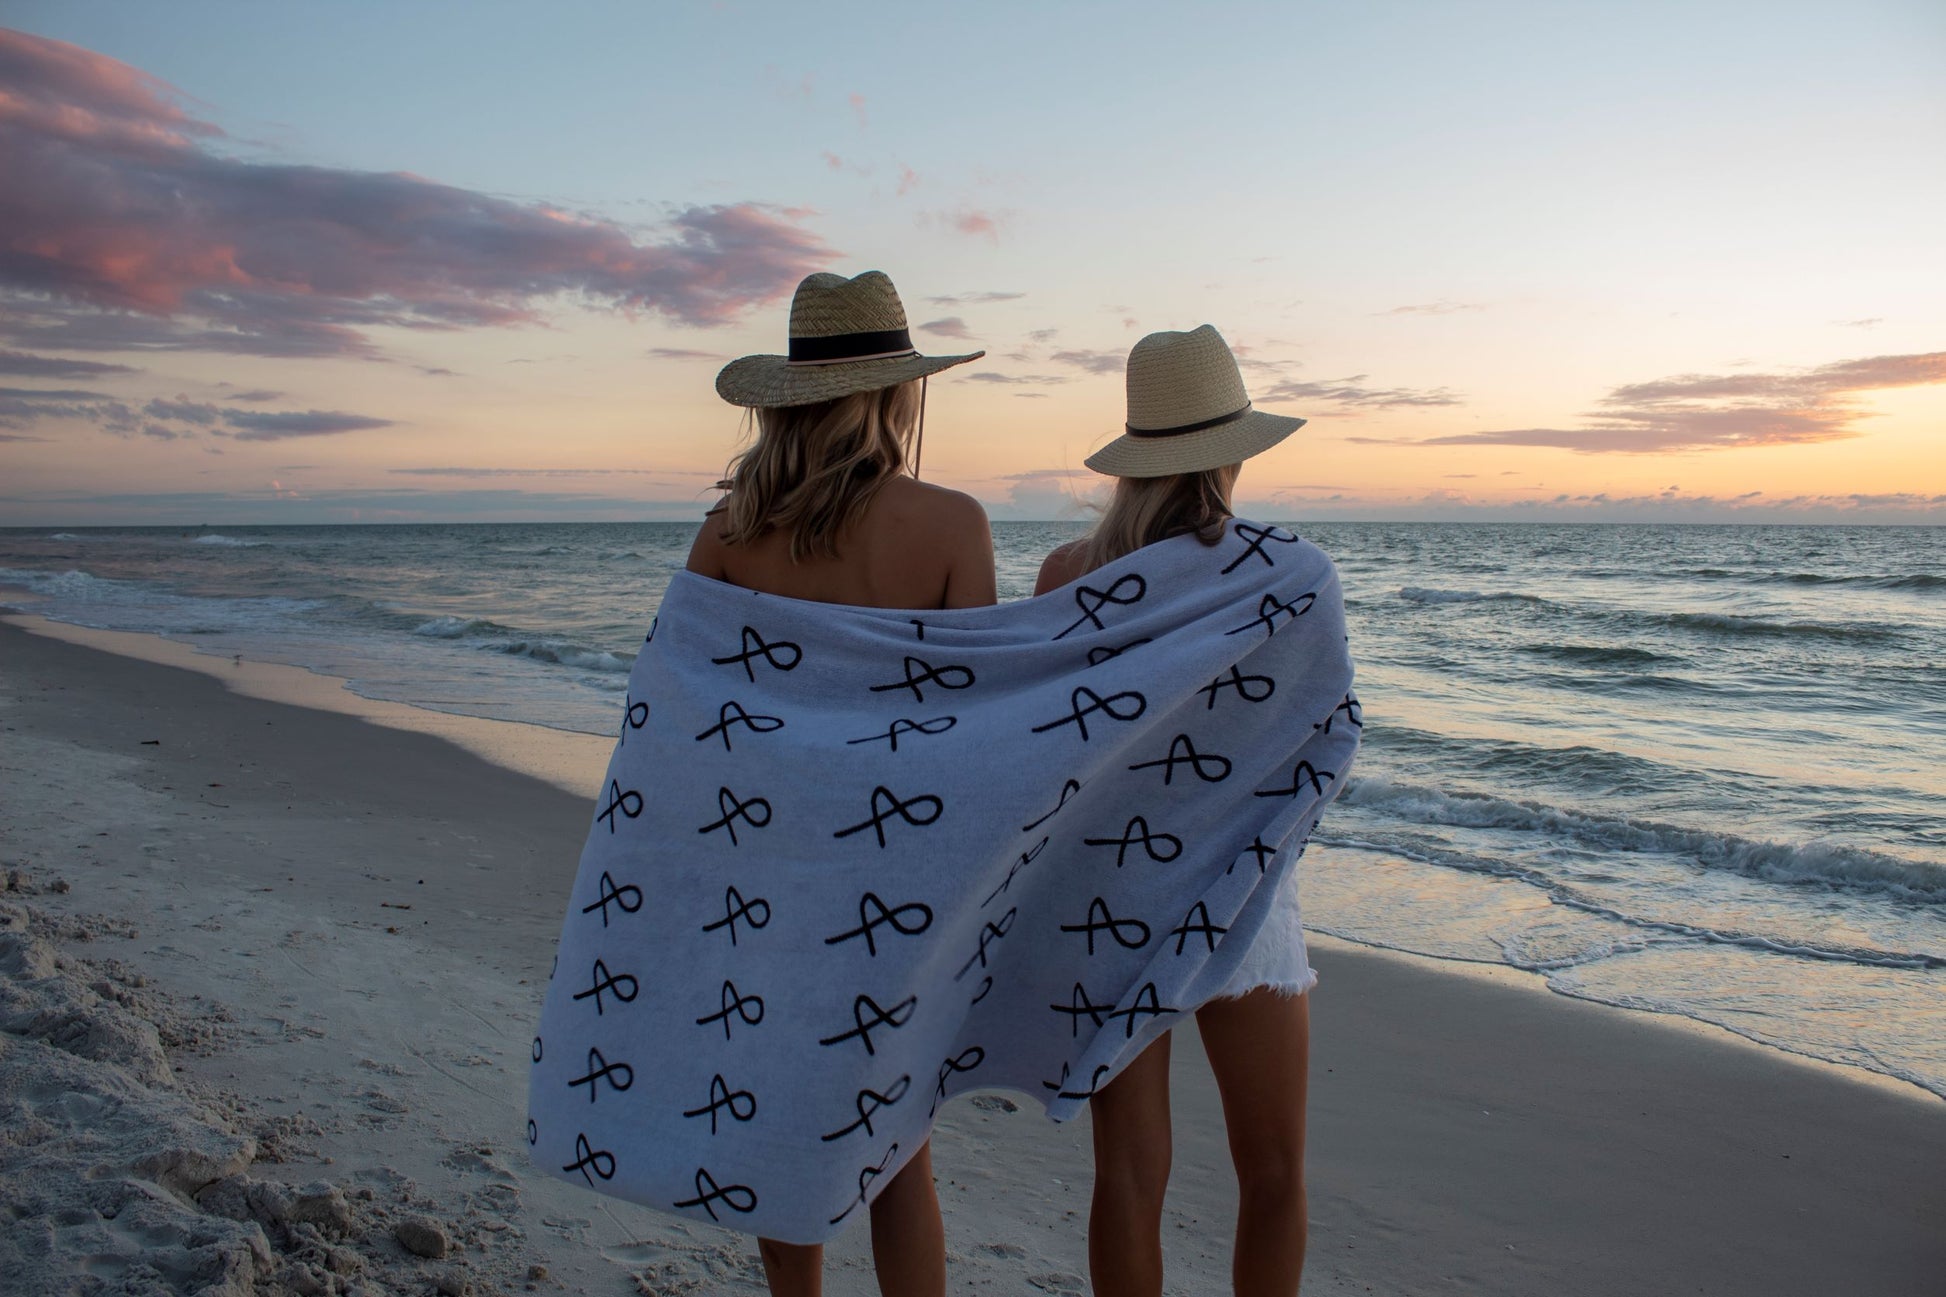 Louis vuitton quick drying beach towel hot 2023 item-super absorbent bath  towel